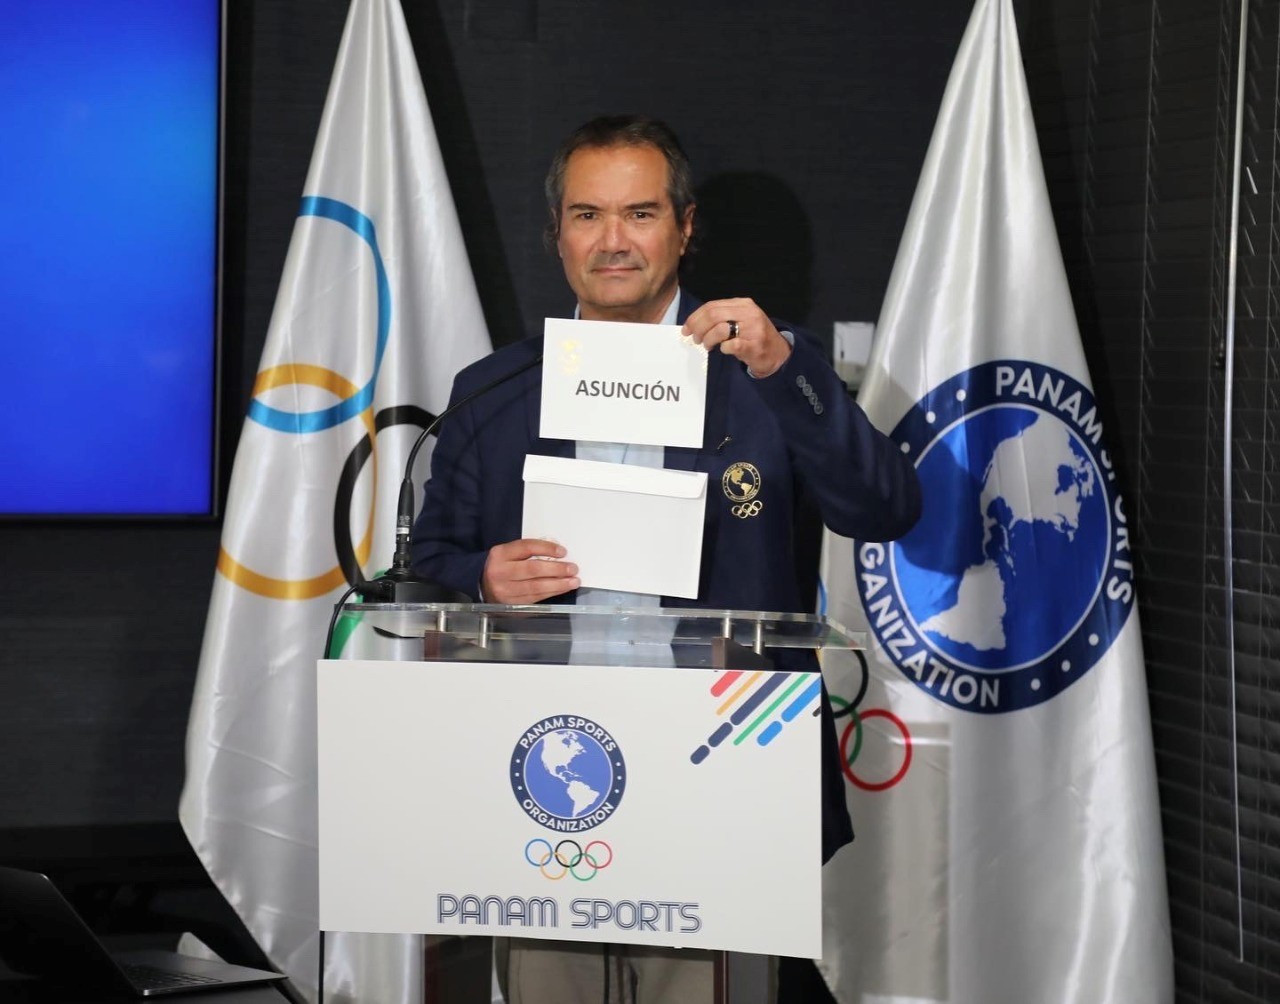 Asunción selected as host of 2025 Junior Pan American Games